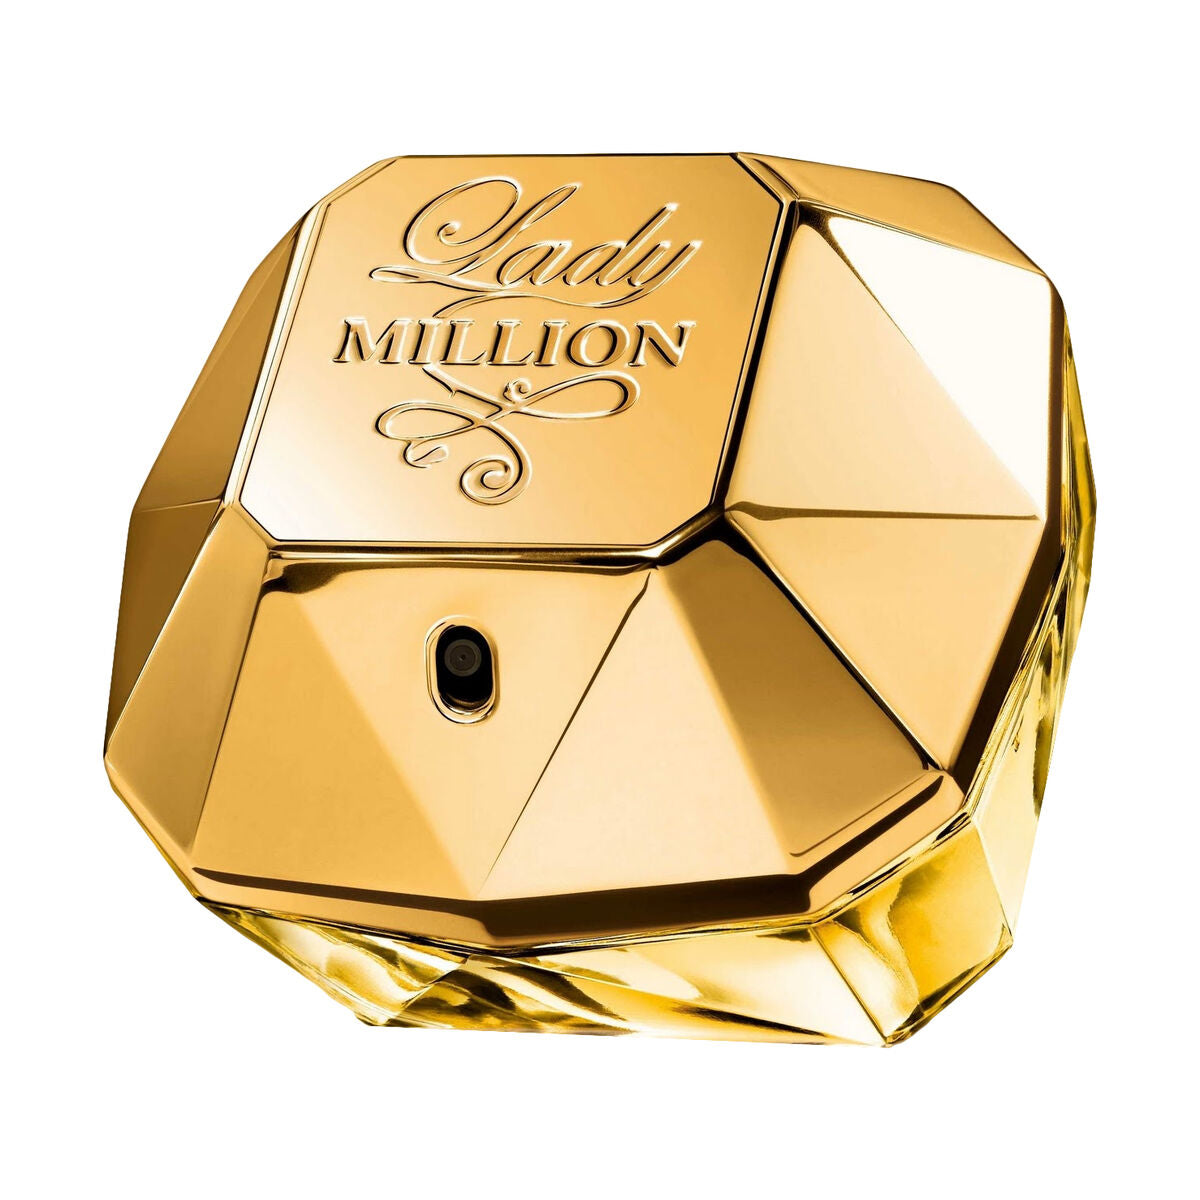 Perfume Mujer Paco Rabanne EDP 80 ml Lady Million